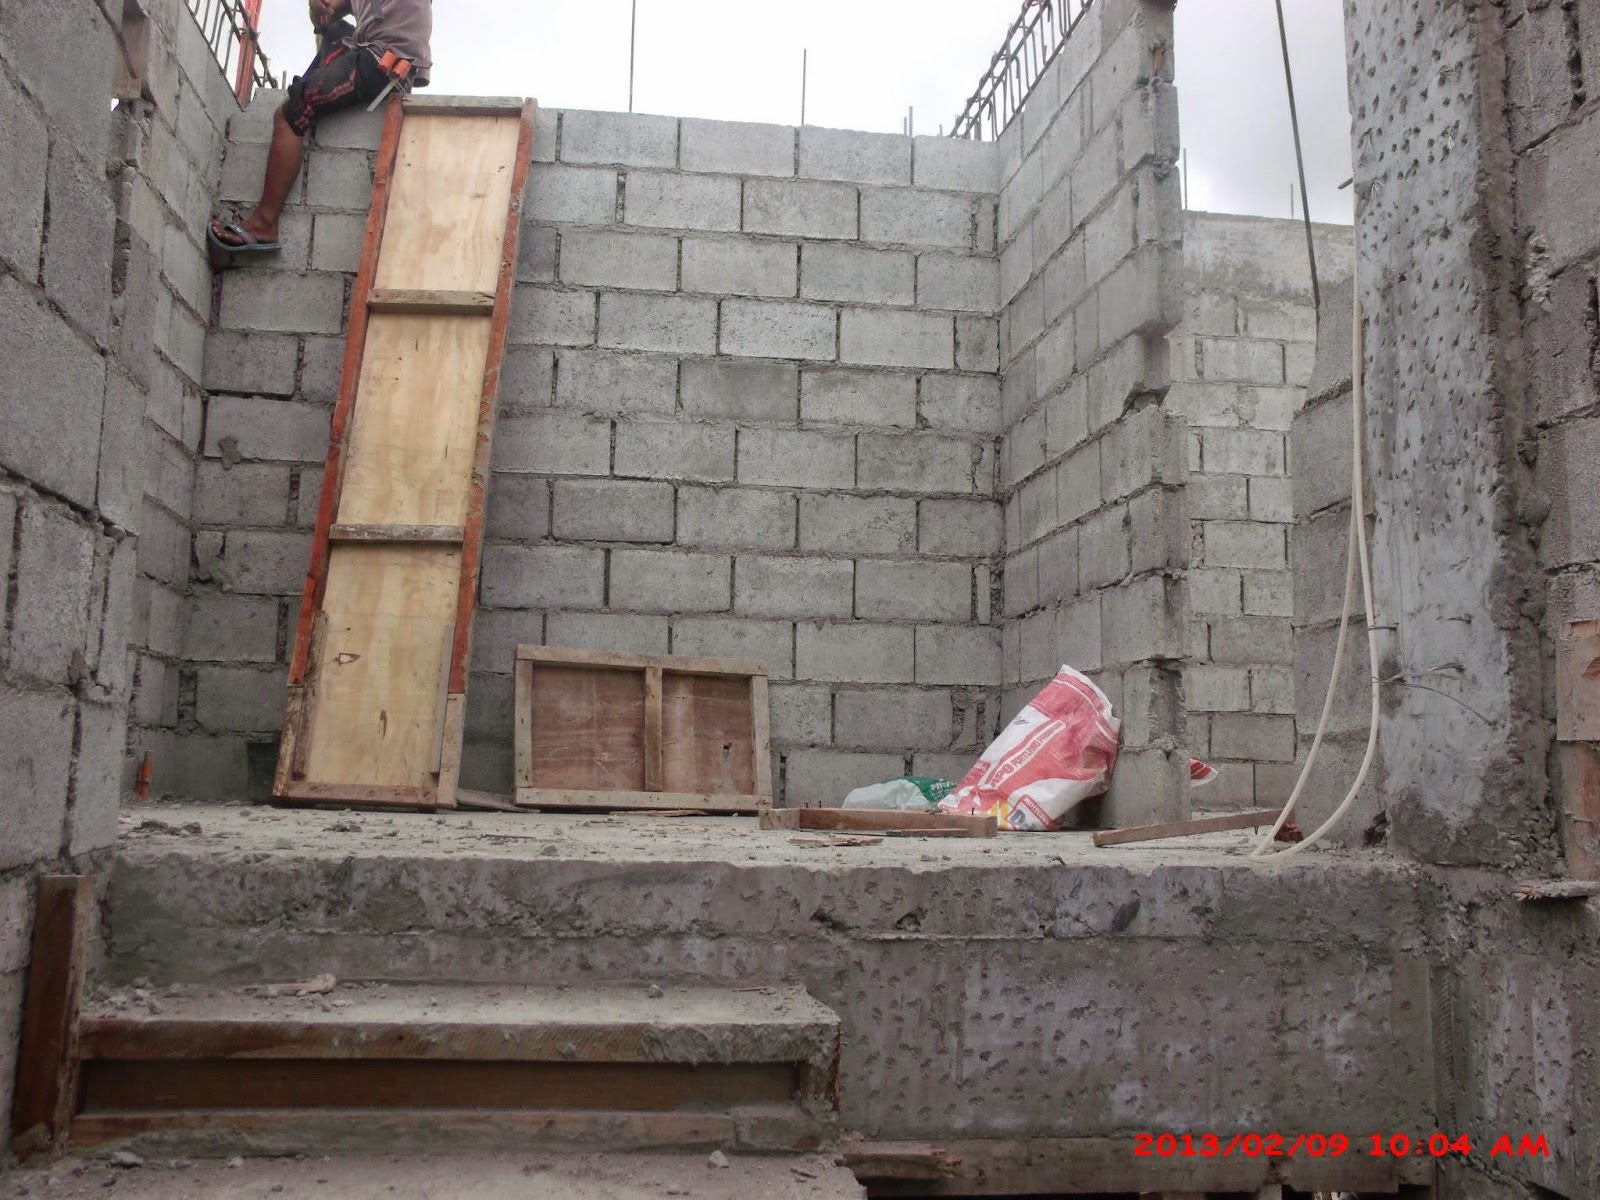 adhesive wallpaper philippines,wall,brickwork,brick,building,bricklayer